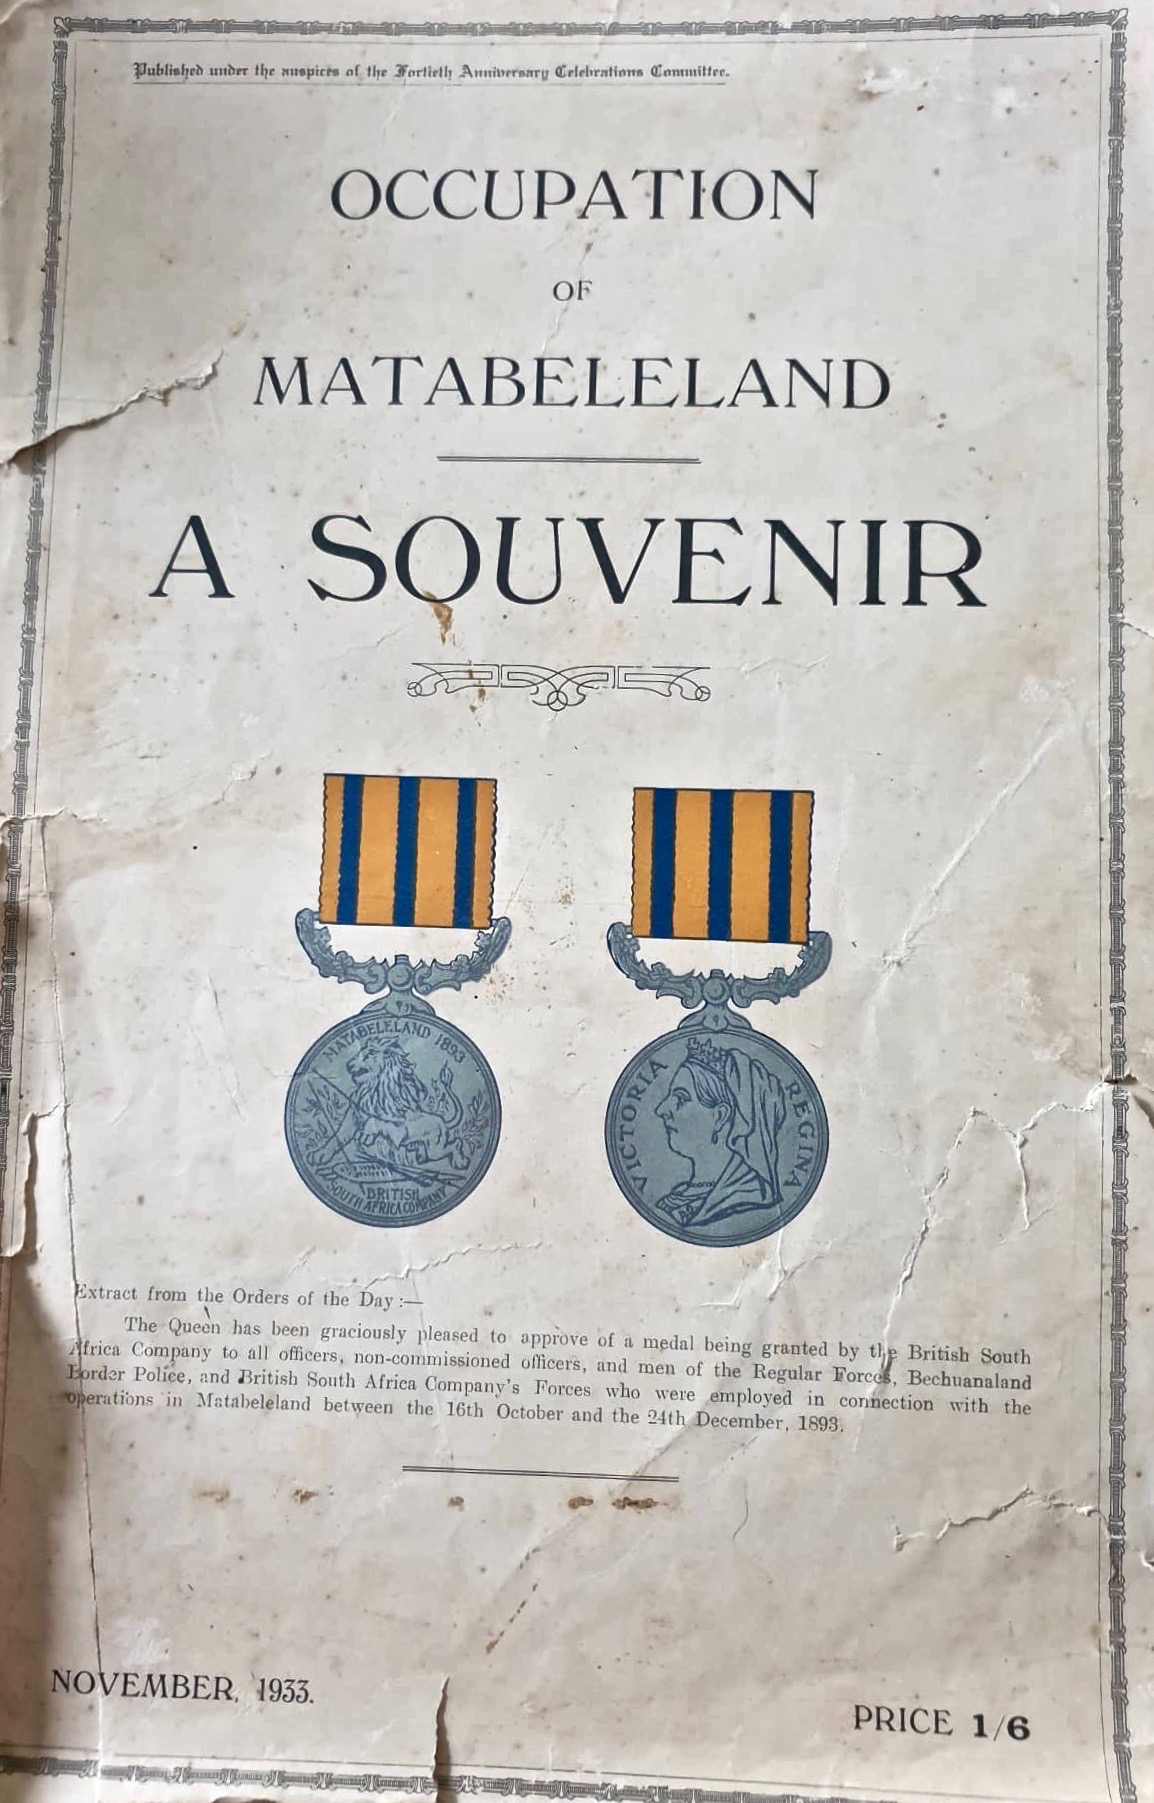 ed_1933_40years_souvenir_medals